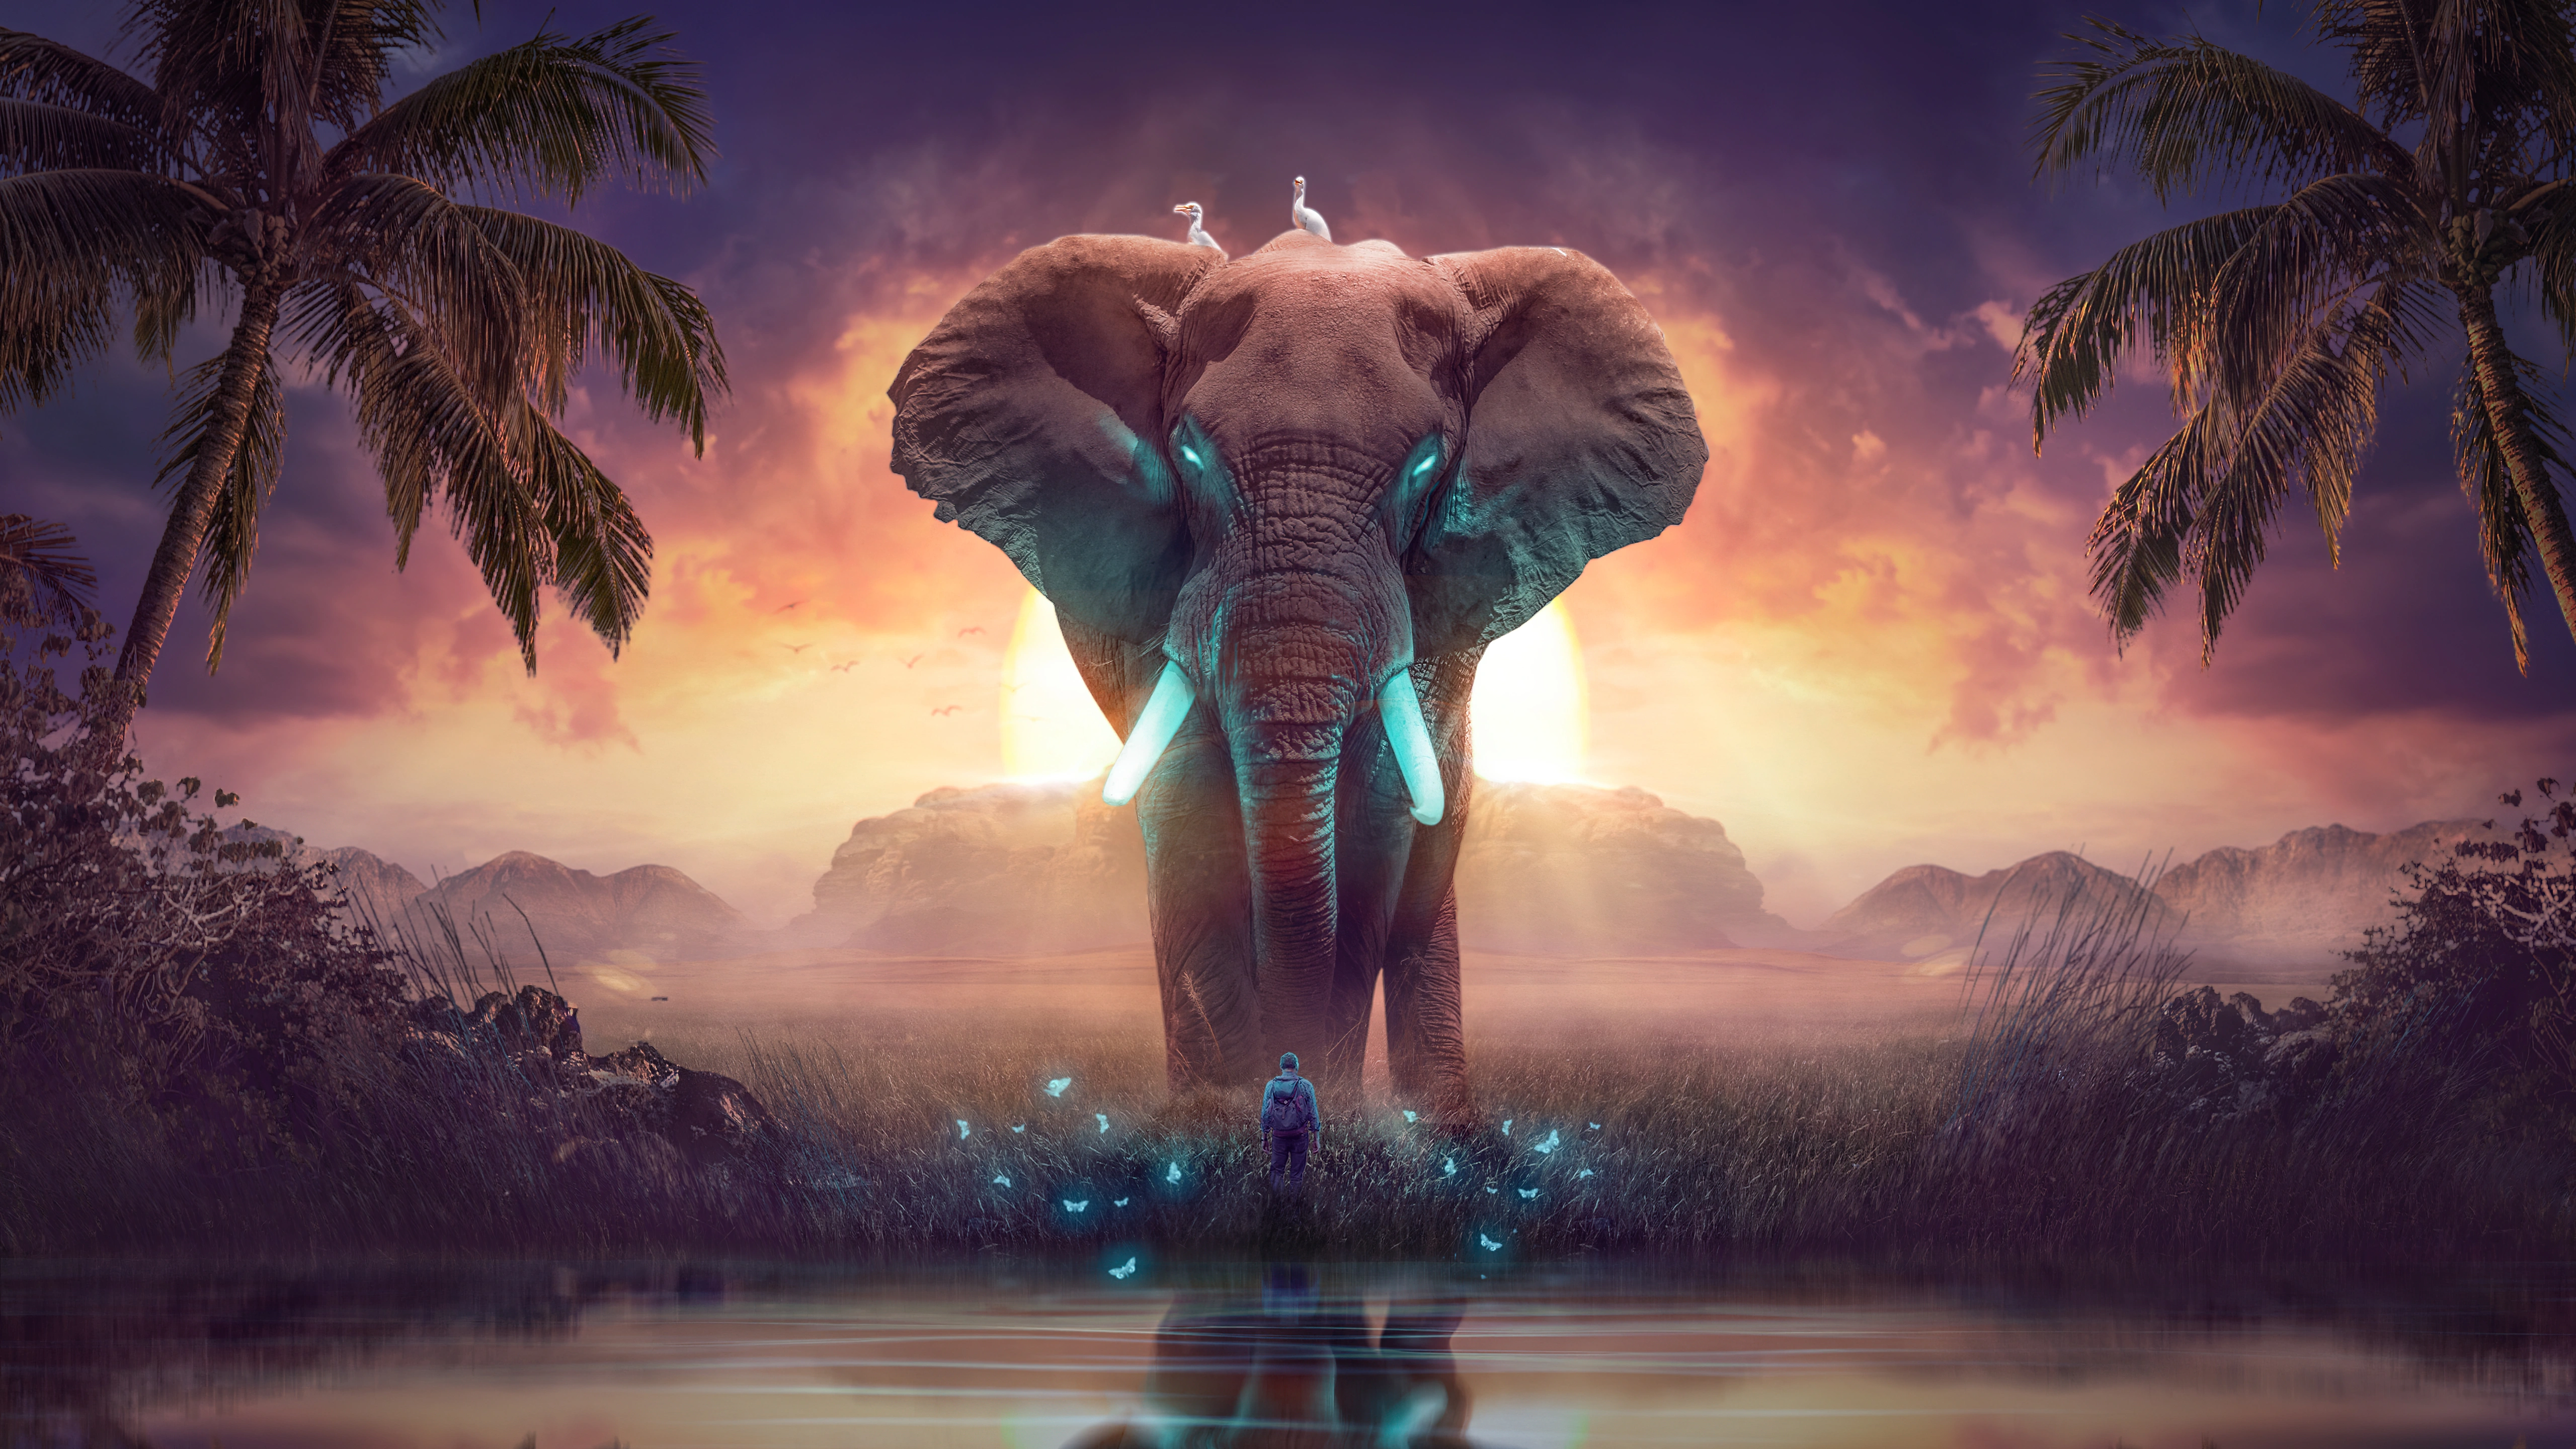 the elephant dream 8u.jpg